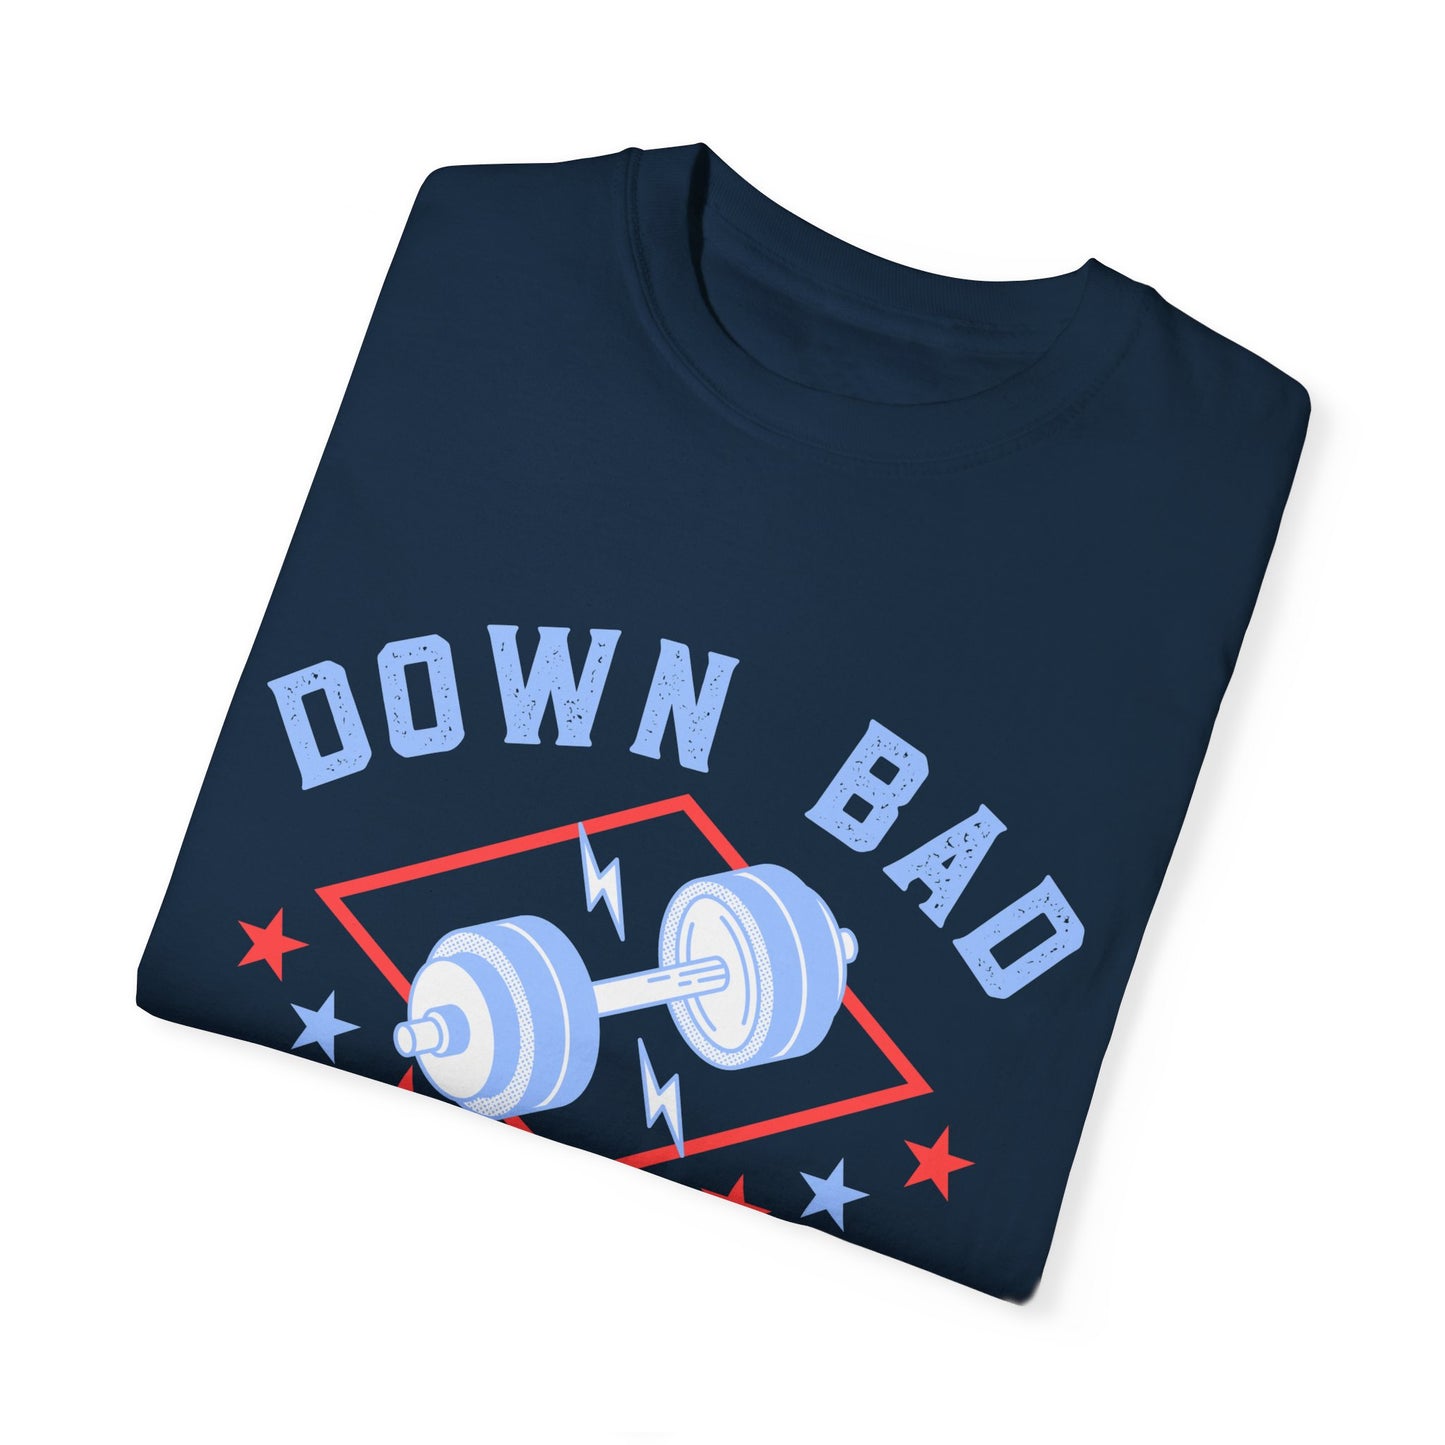 Down Bad Garment-Dyed T-shirt